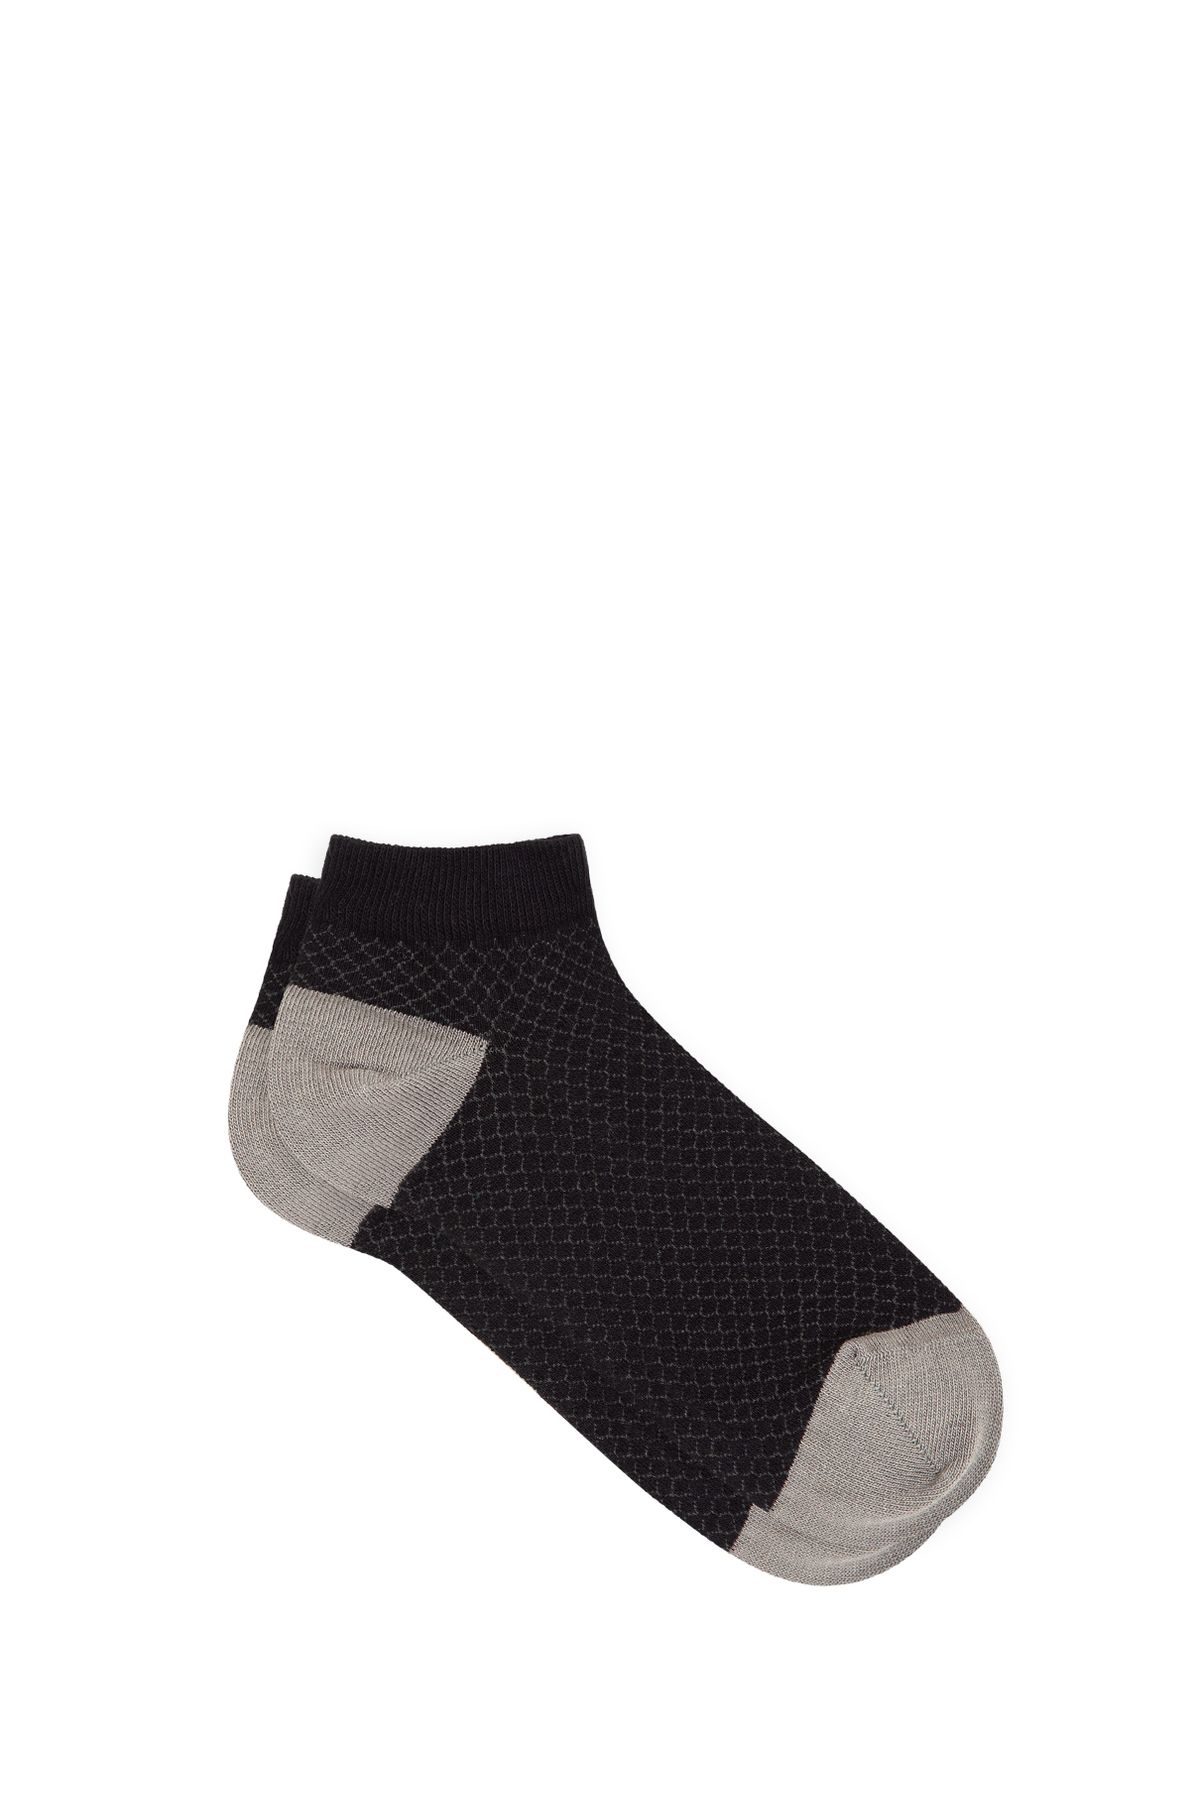 Mavi Siyah Patik Çorap 092042-900